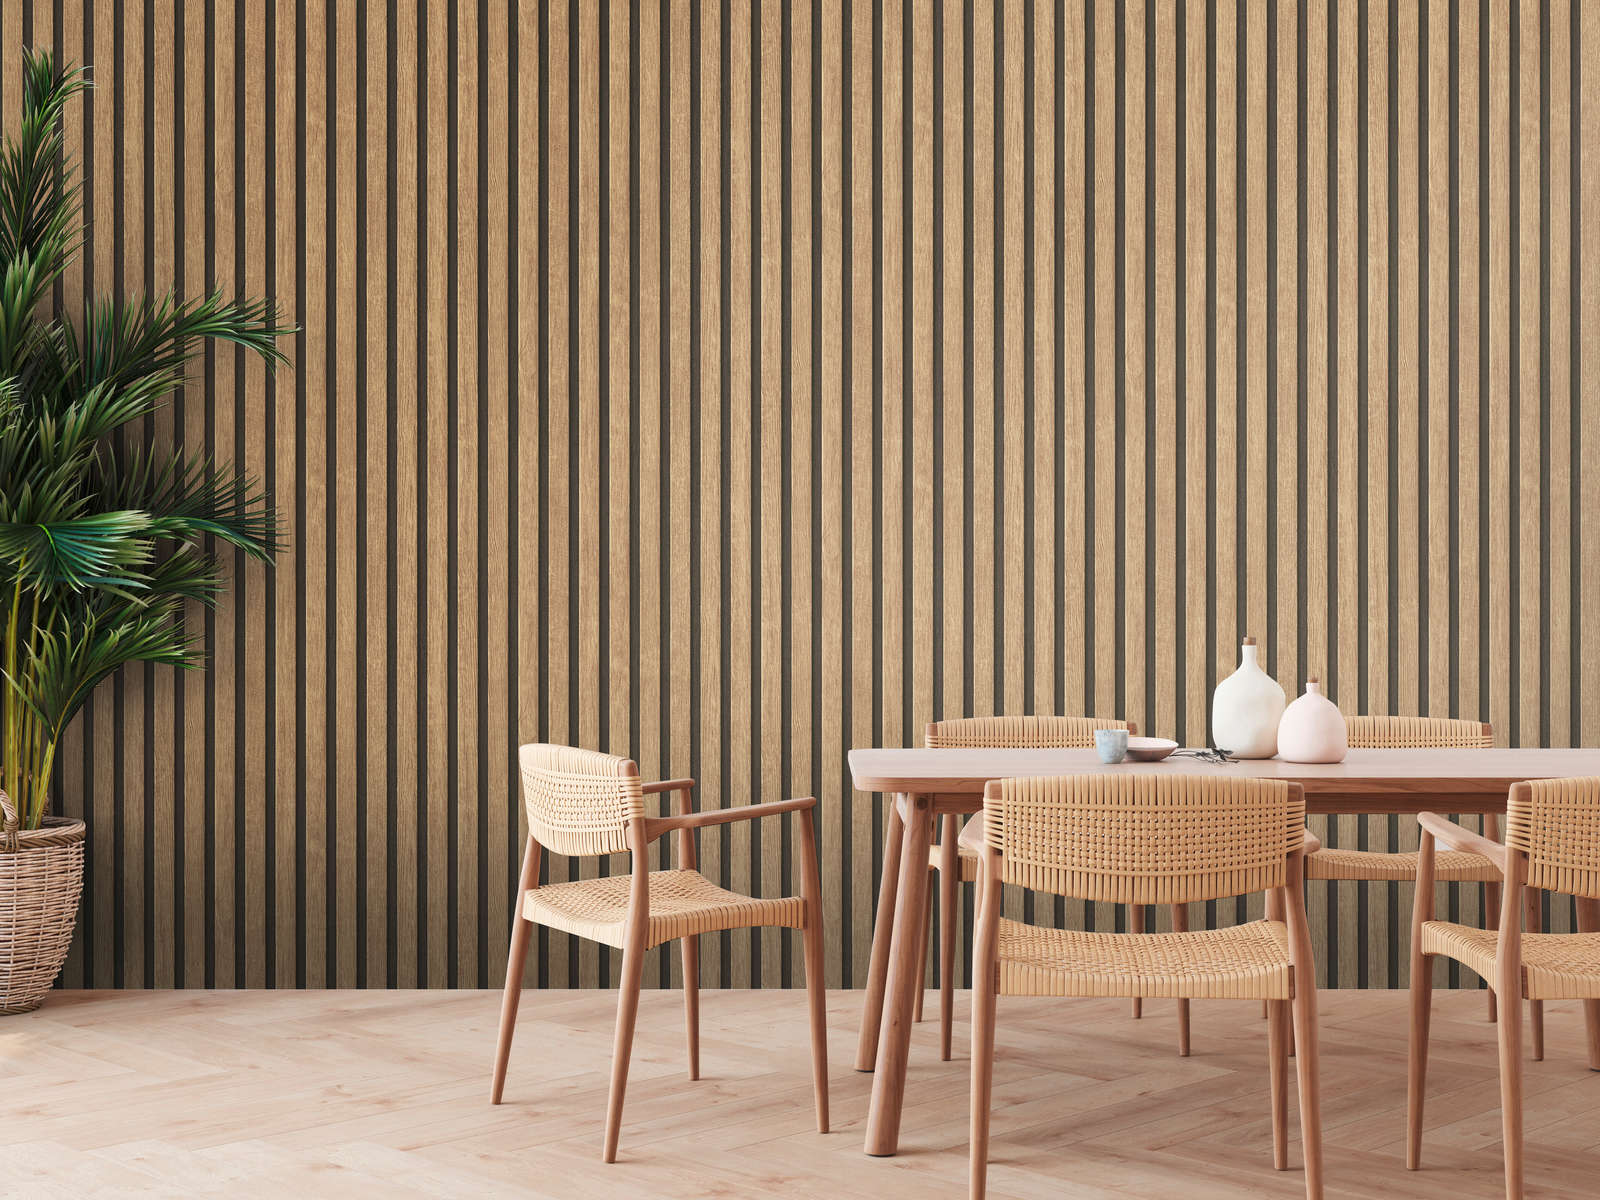             Wallpaper wood look with panel pattern - beige, brown
        